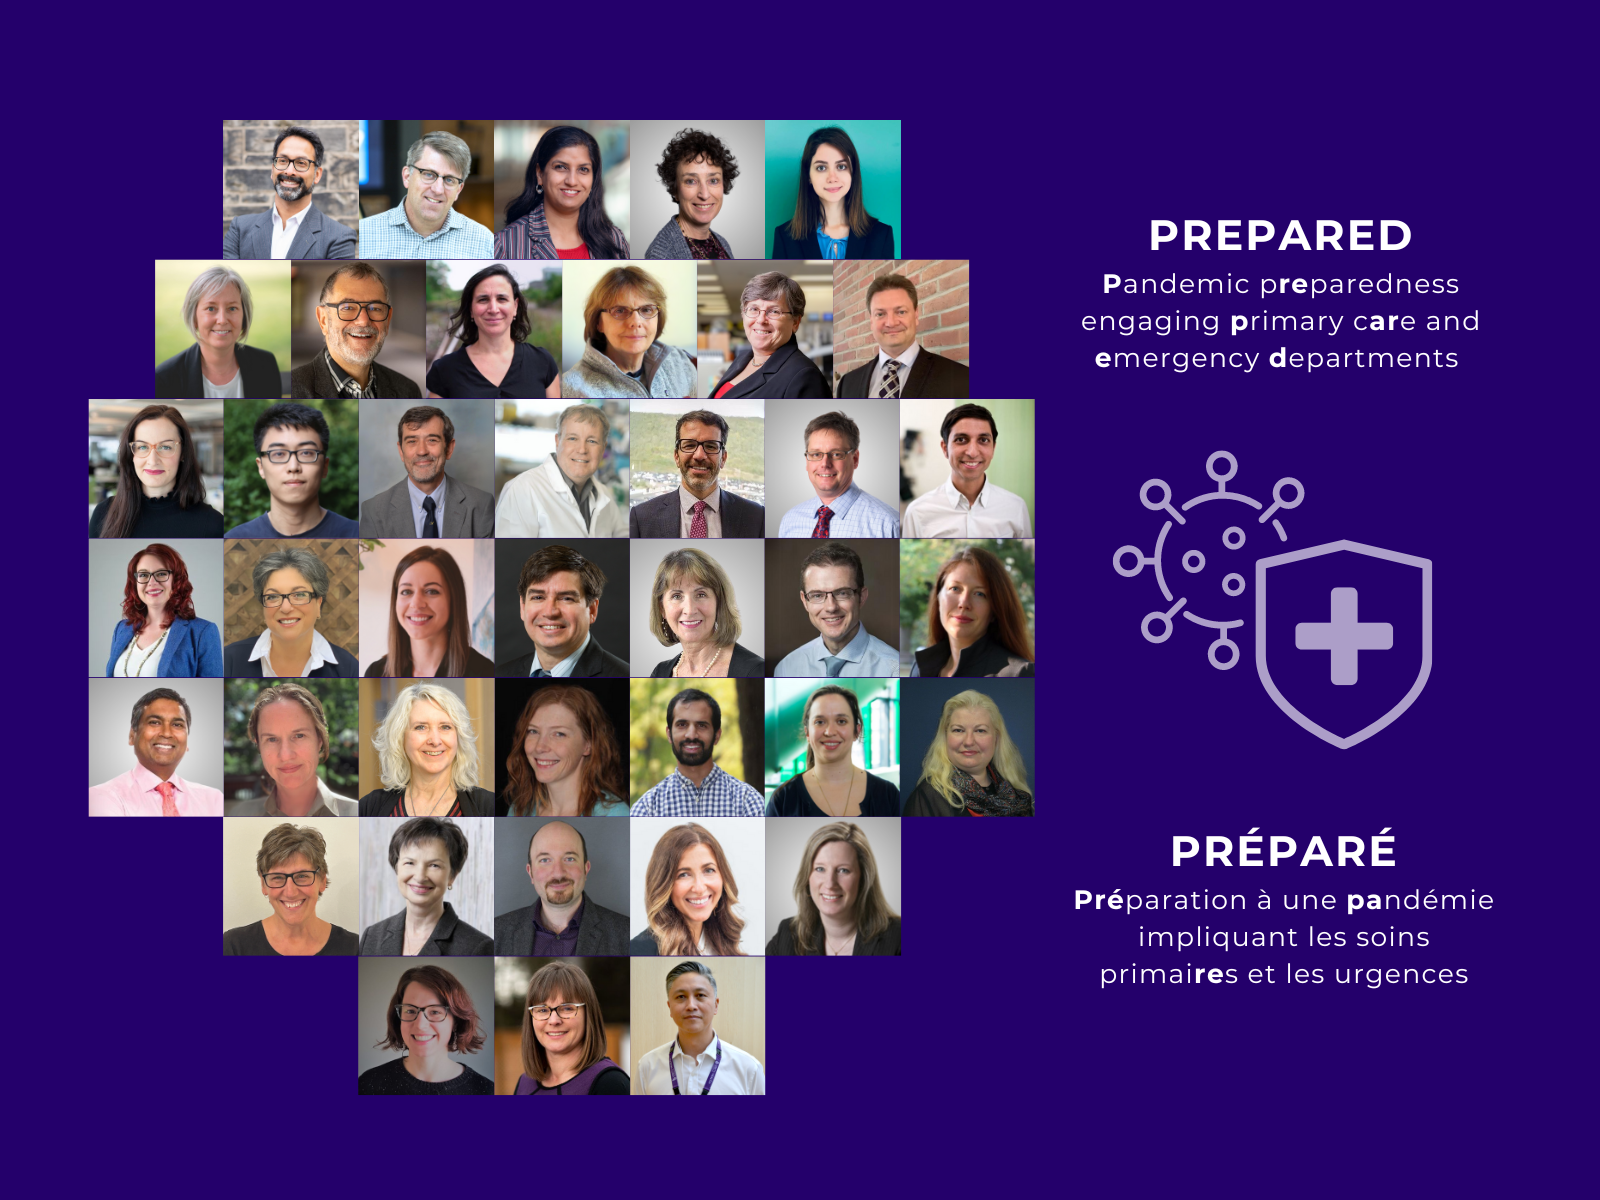 PREPARED team members and partners